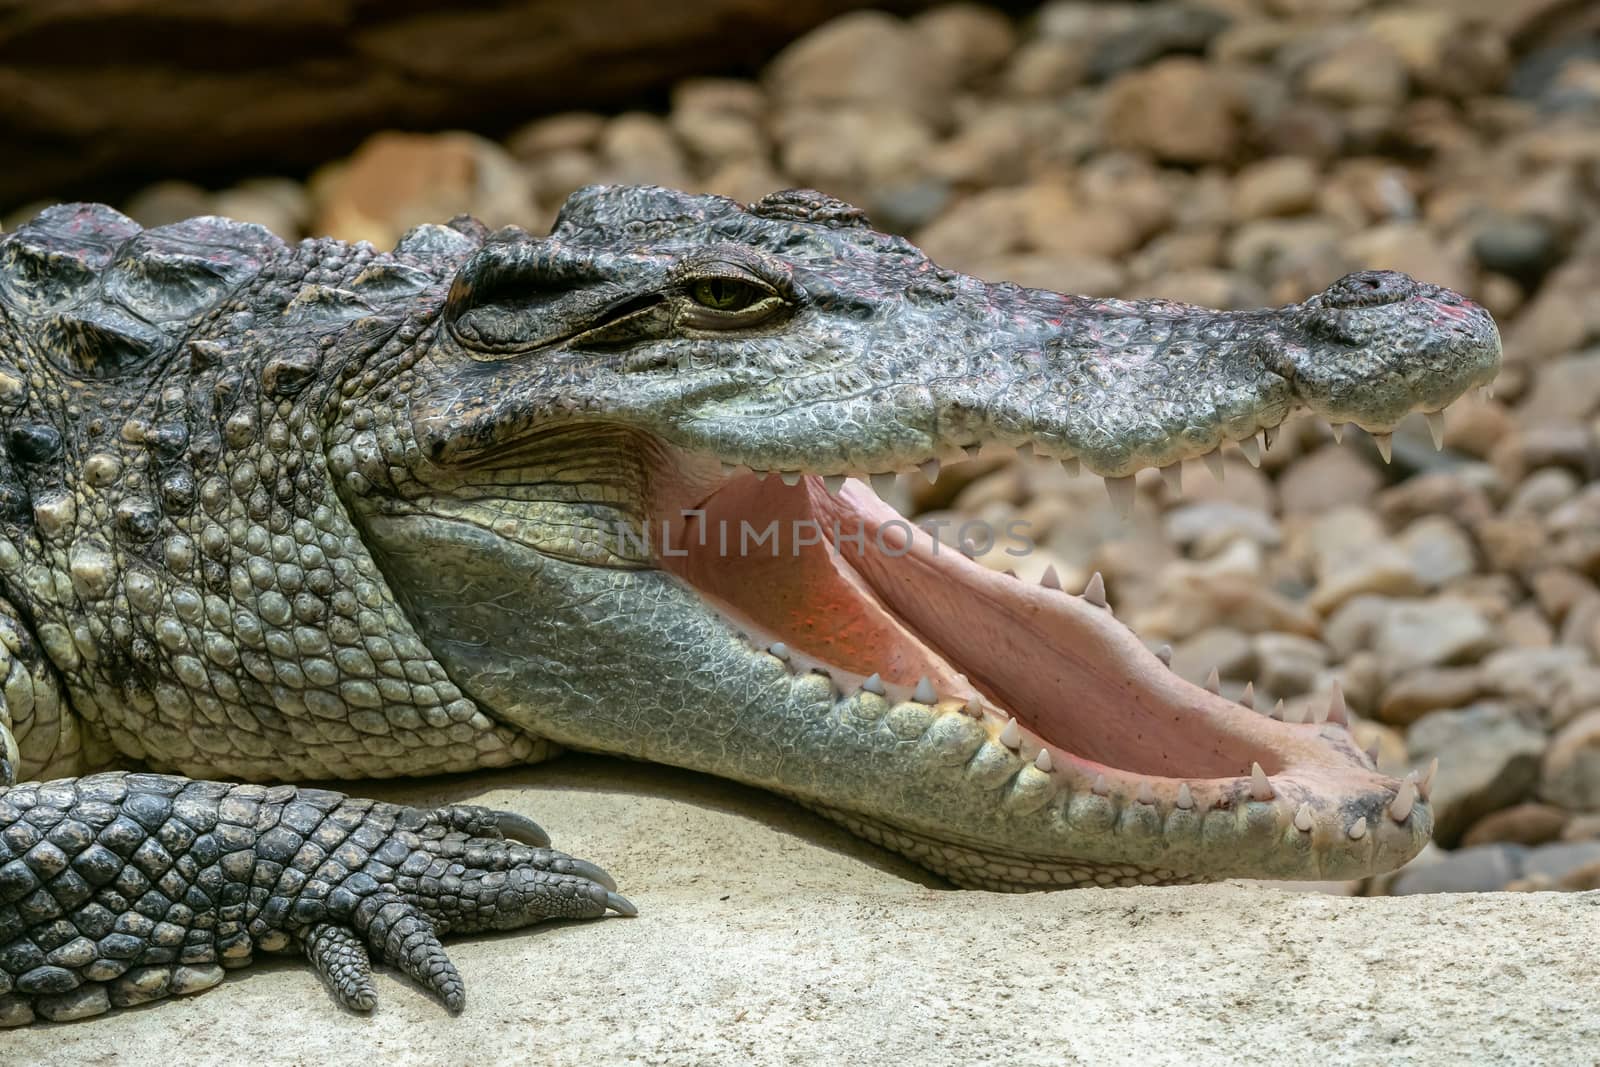 Siamese crocodile with open mouth (Crocodylus siamensis). Big mouth full of teeth